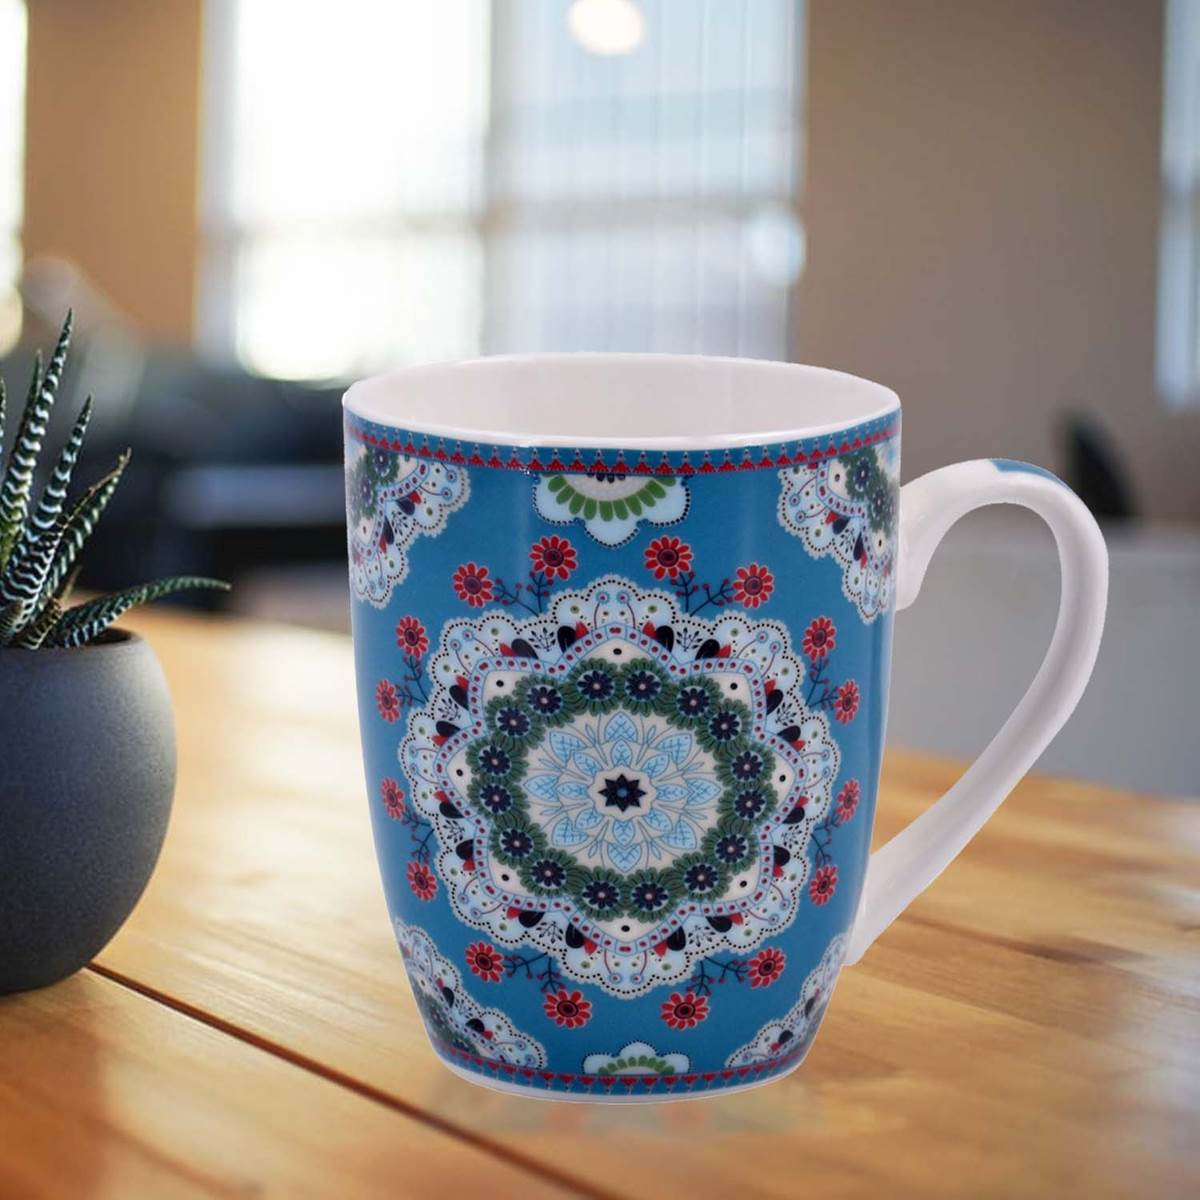 Printed Ceramic Coffee or Tea Mug with handle - 325ml (3403G-D)